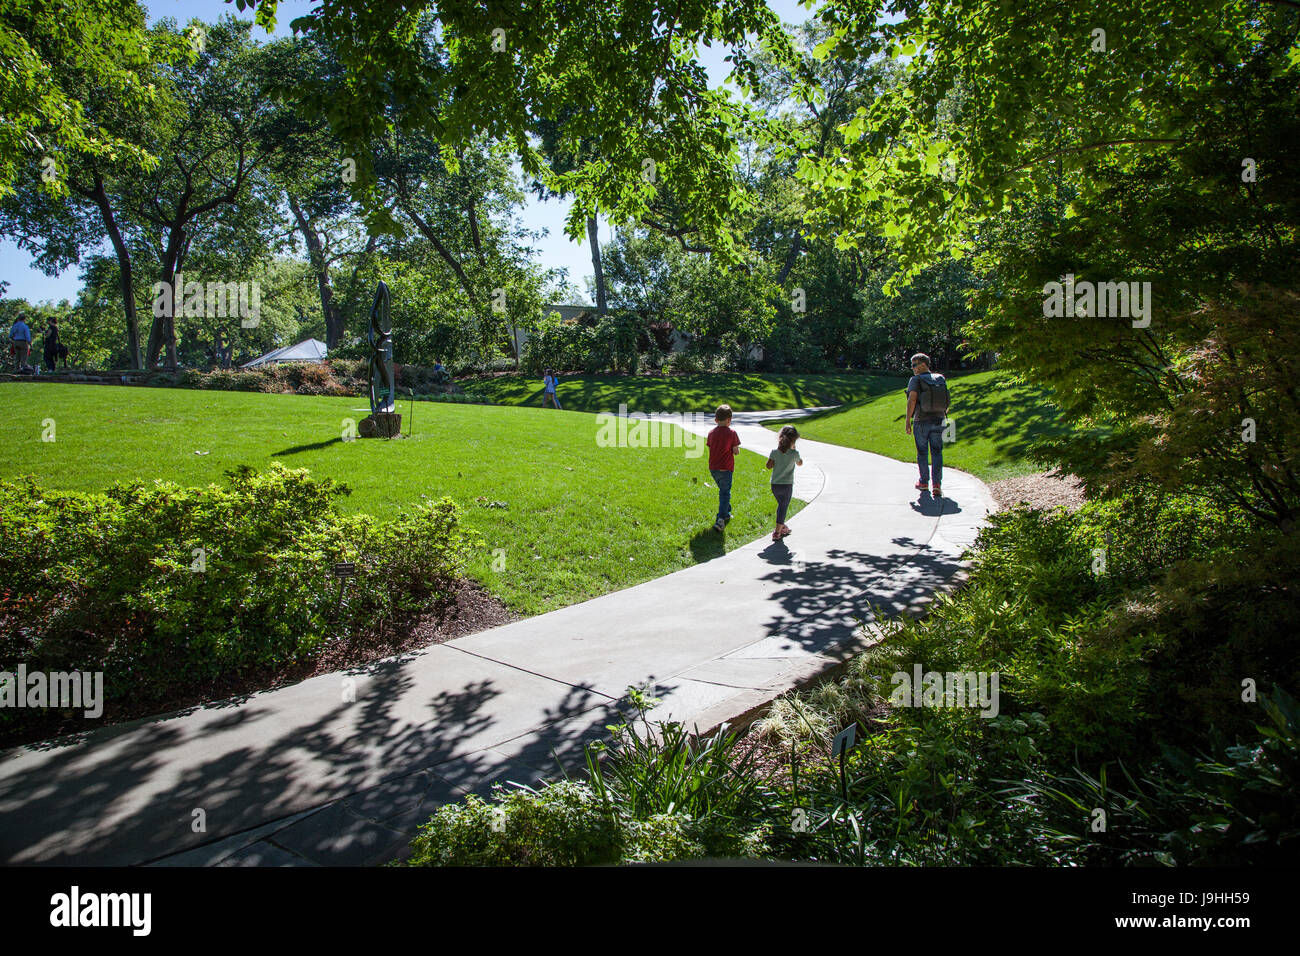 Texas, Dallas Arboretum and Botanical Garden Stock Photo